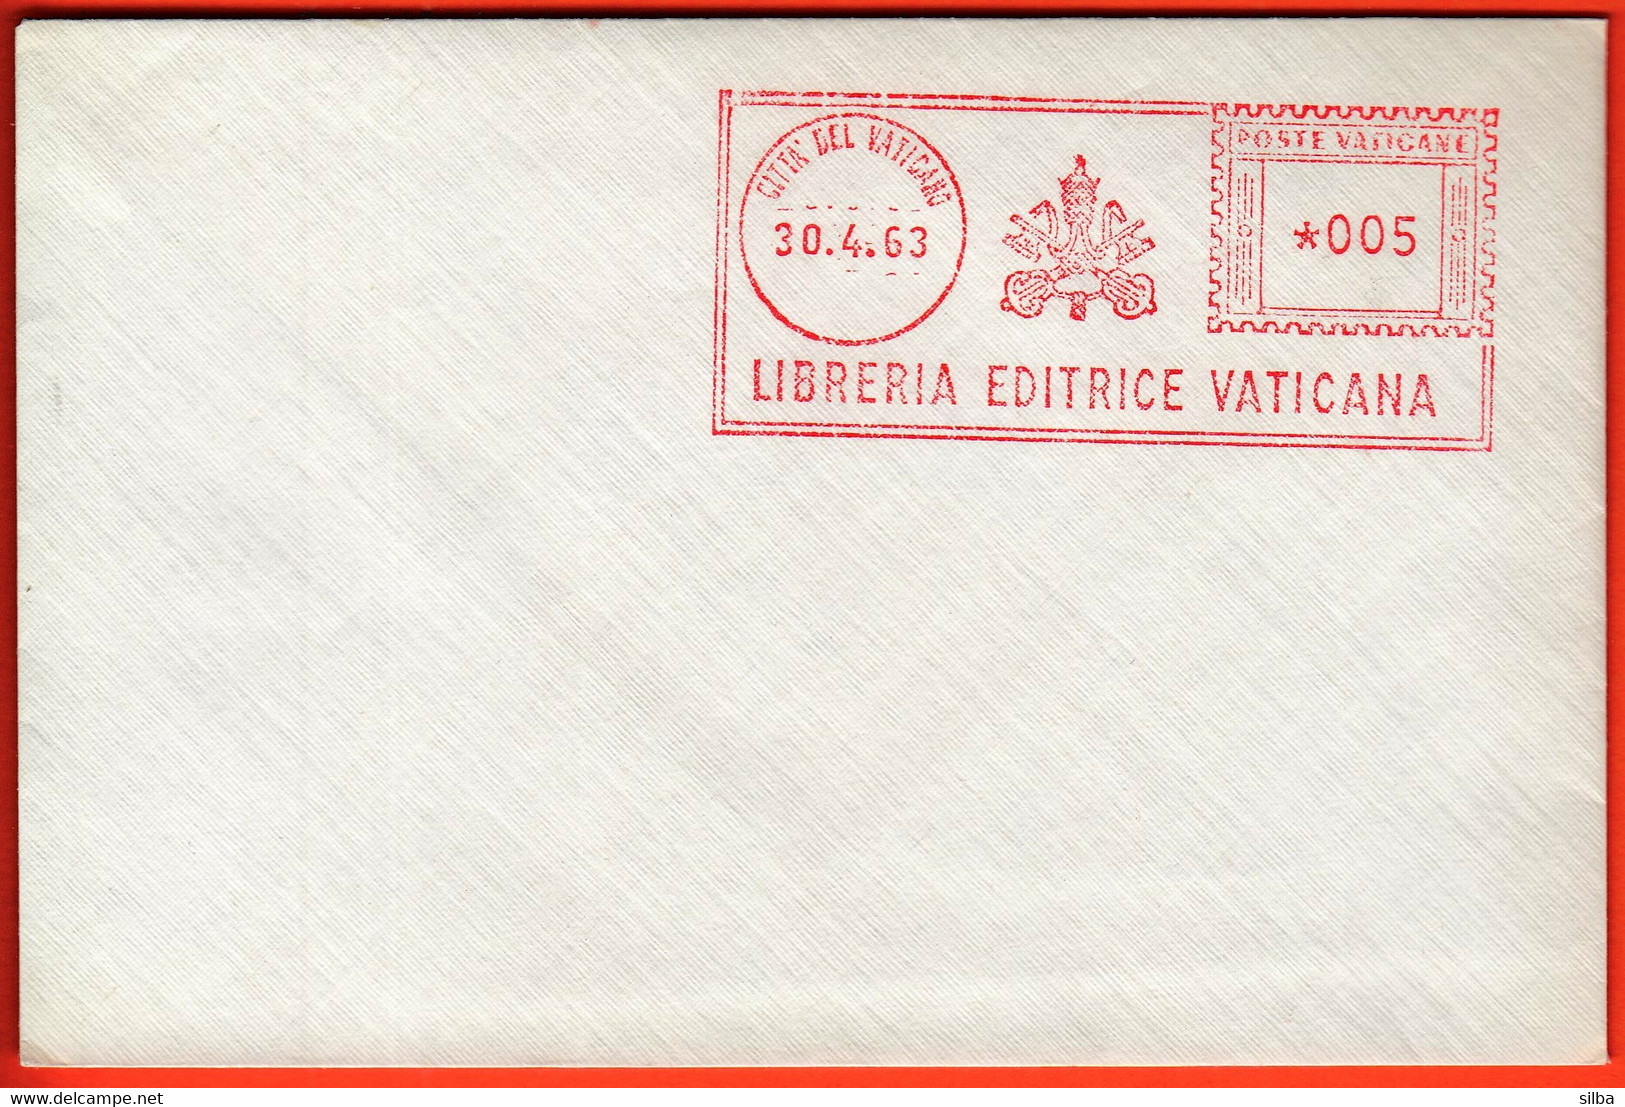 Vatican 1963 / Libreria Editrice Vaticana, Vatican Publishing Library, Coat Of Arms / Machine Stamp - Maschinenstempel (EMA)